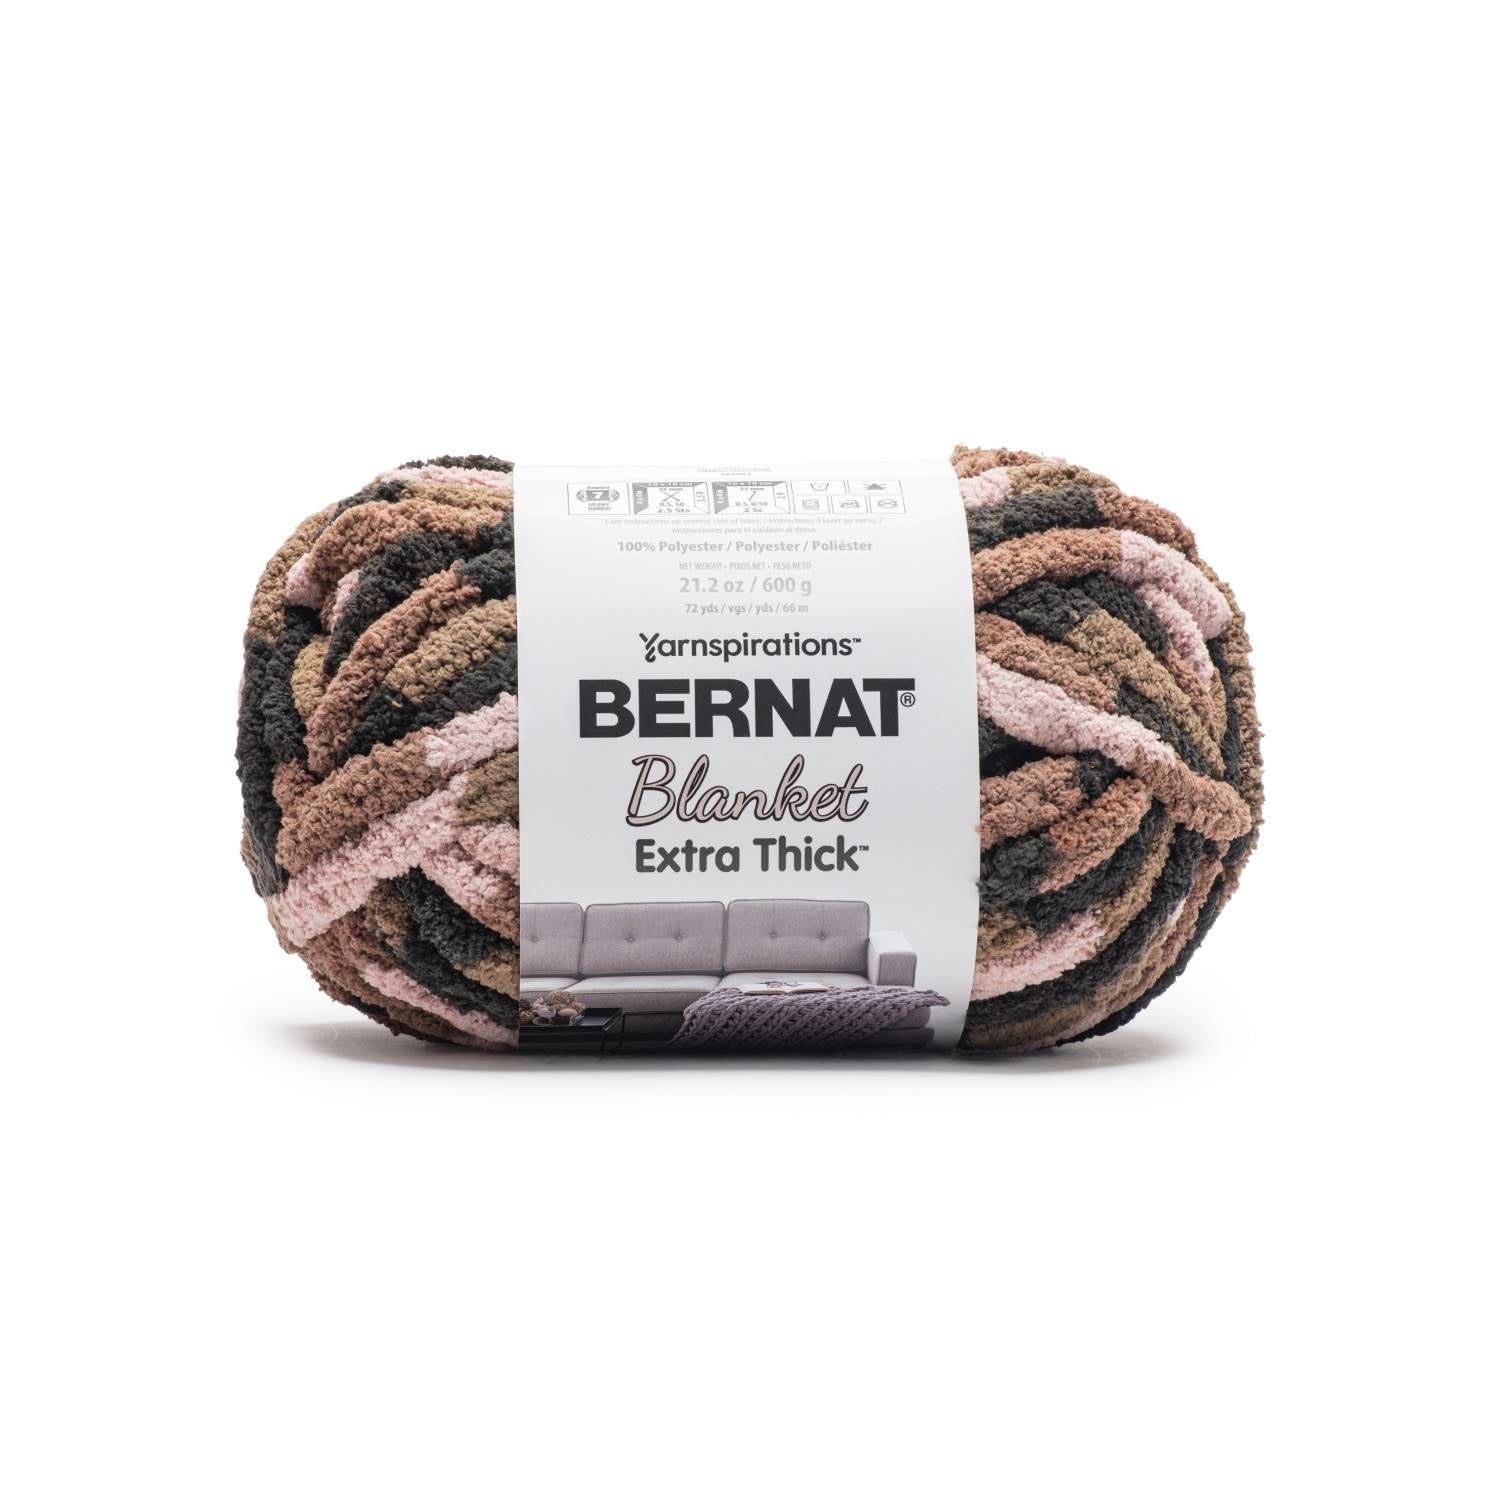 Bernat Blanket Extra Thick Yarn (600g/21.2oz) - Discontinued Shades Taupe Swirl